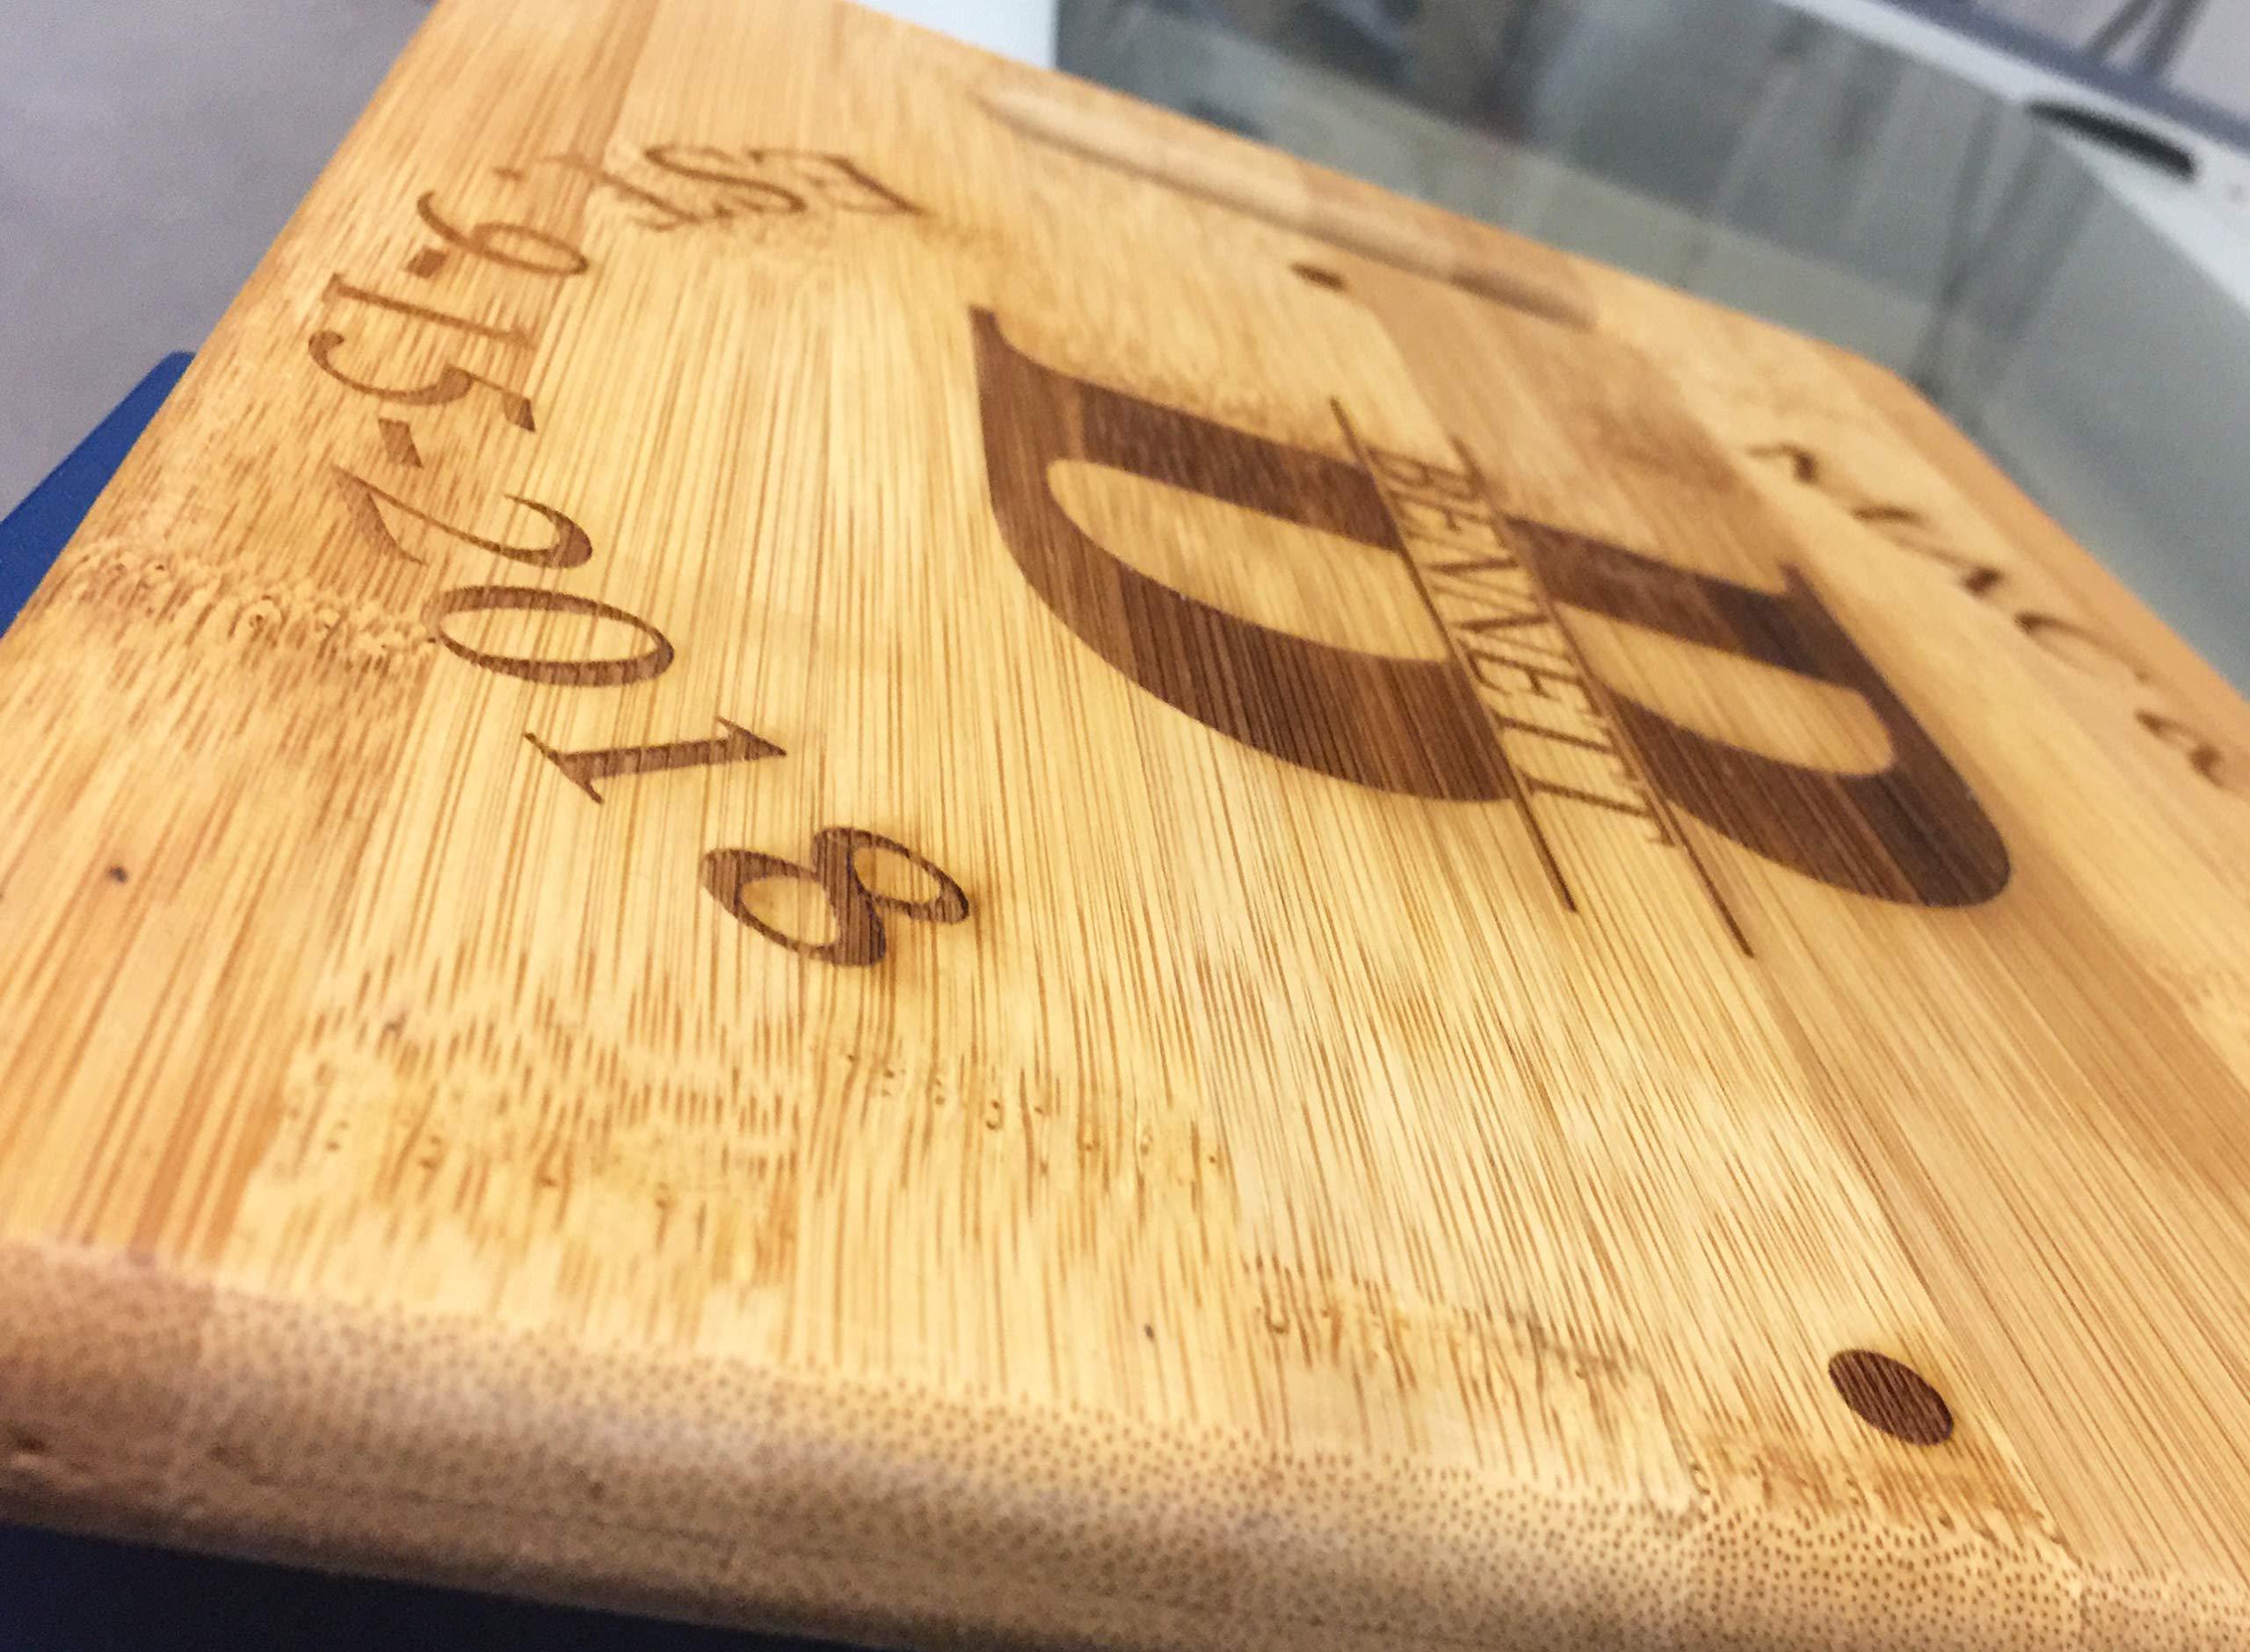 Krezy Case family name personalized wooden cutting board -fancy custom cutting board - housewarming gift, wedding gift, personalized (cu